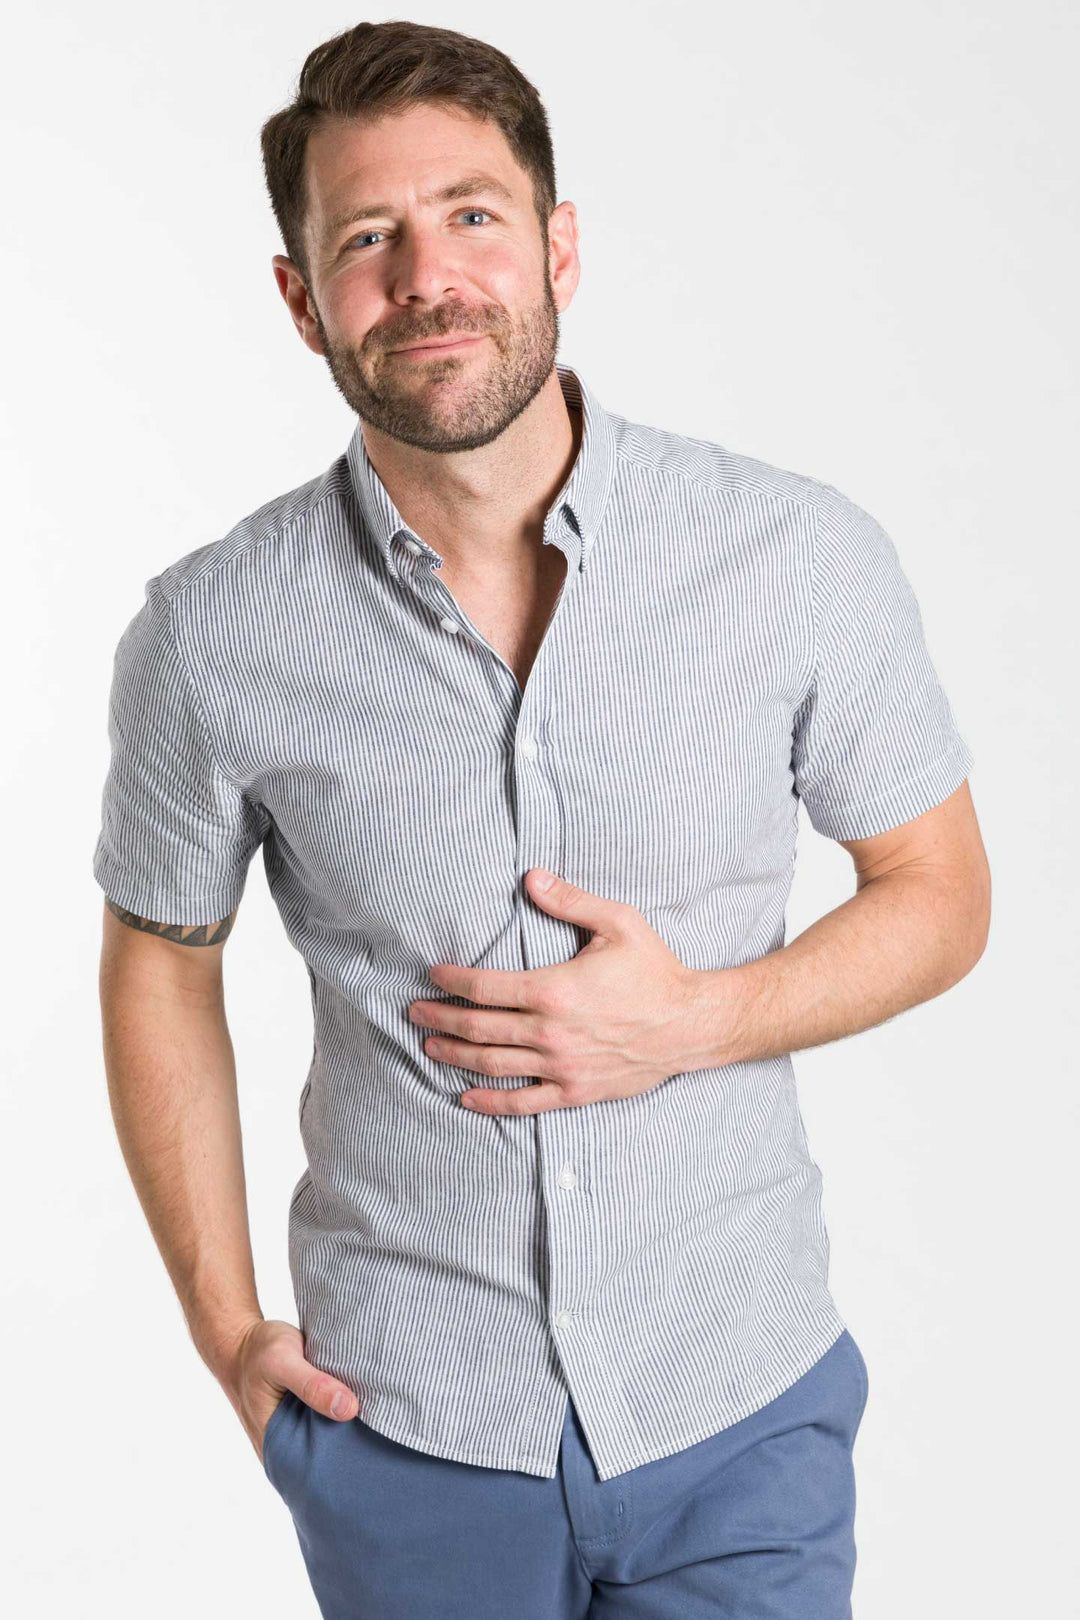 Buy Linen Stripes Plaid Short Sleeve Shirt for Short Men | Ash & Erie   Short Sleeve Everyday Shirts